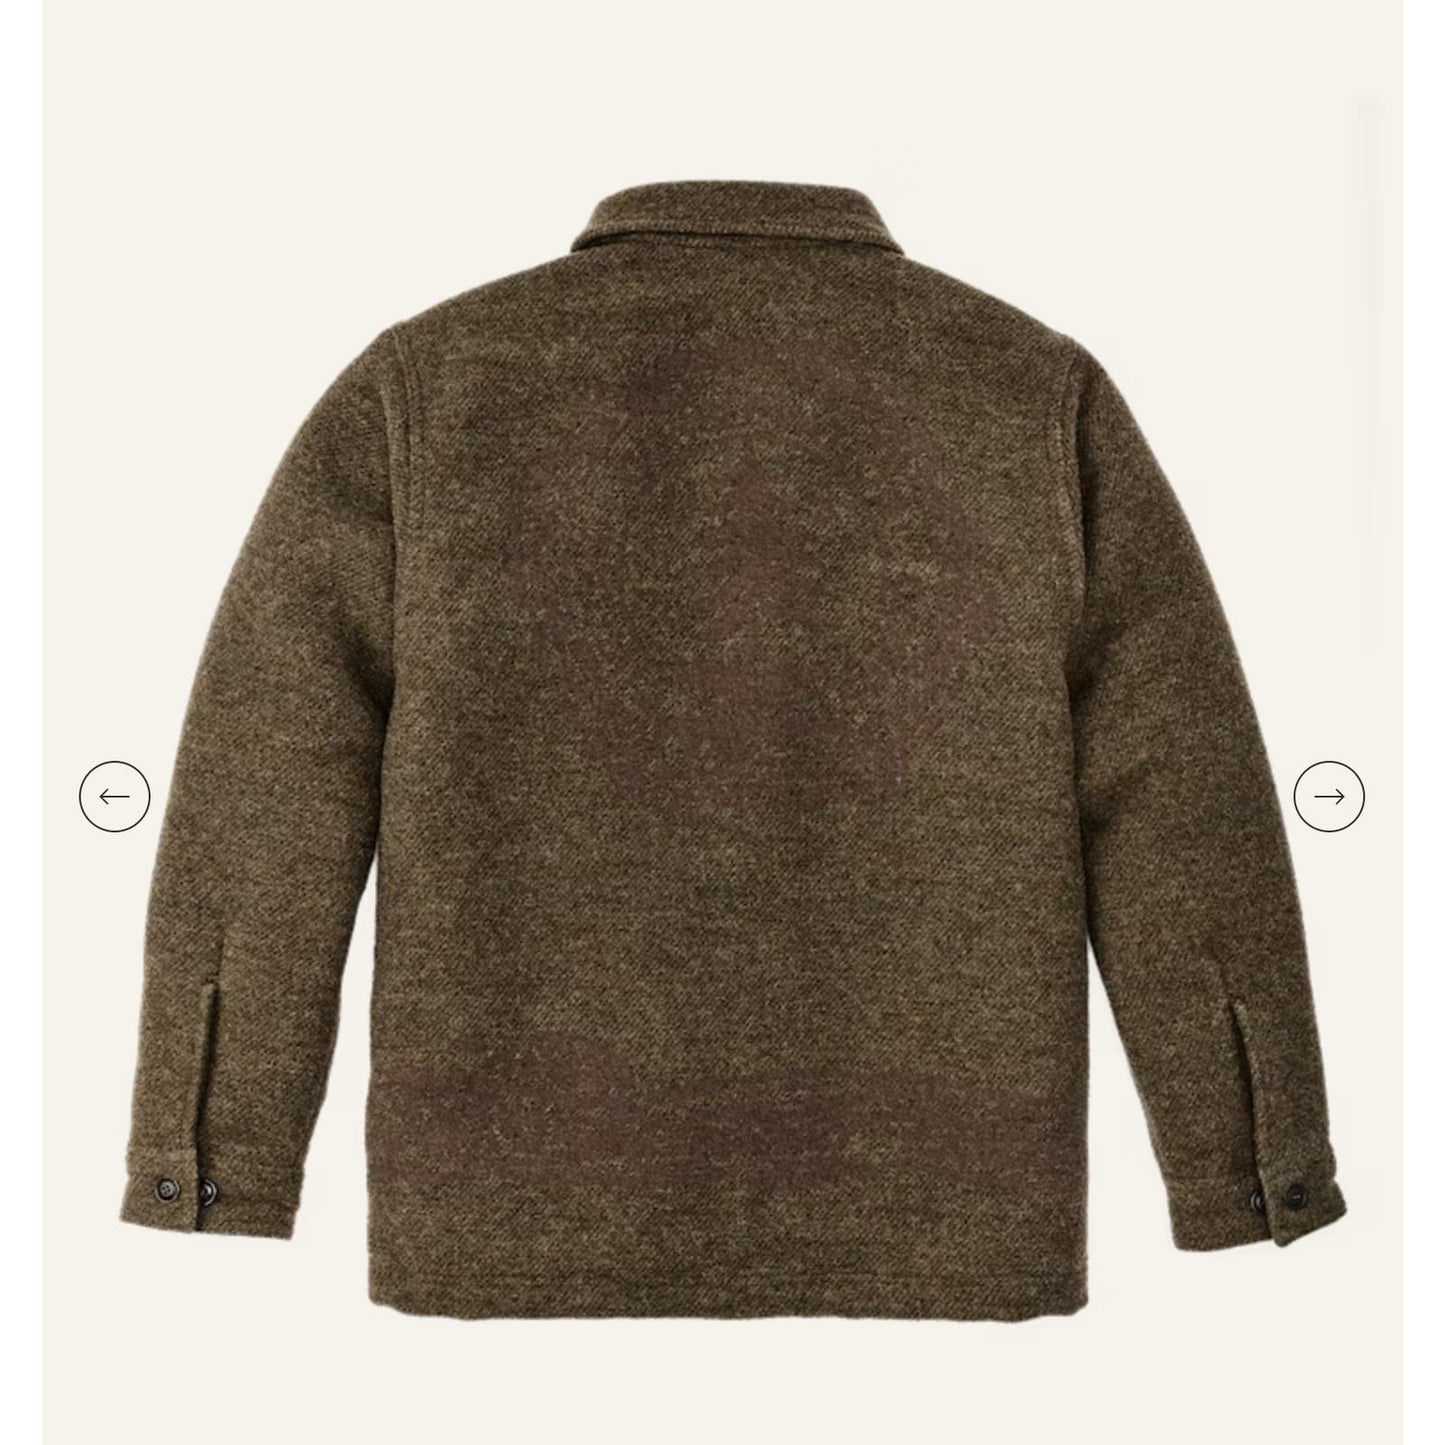 🔴 Filson Wool Jac-Shirt Jacquard CCC - XS